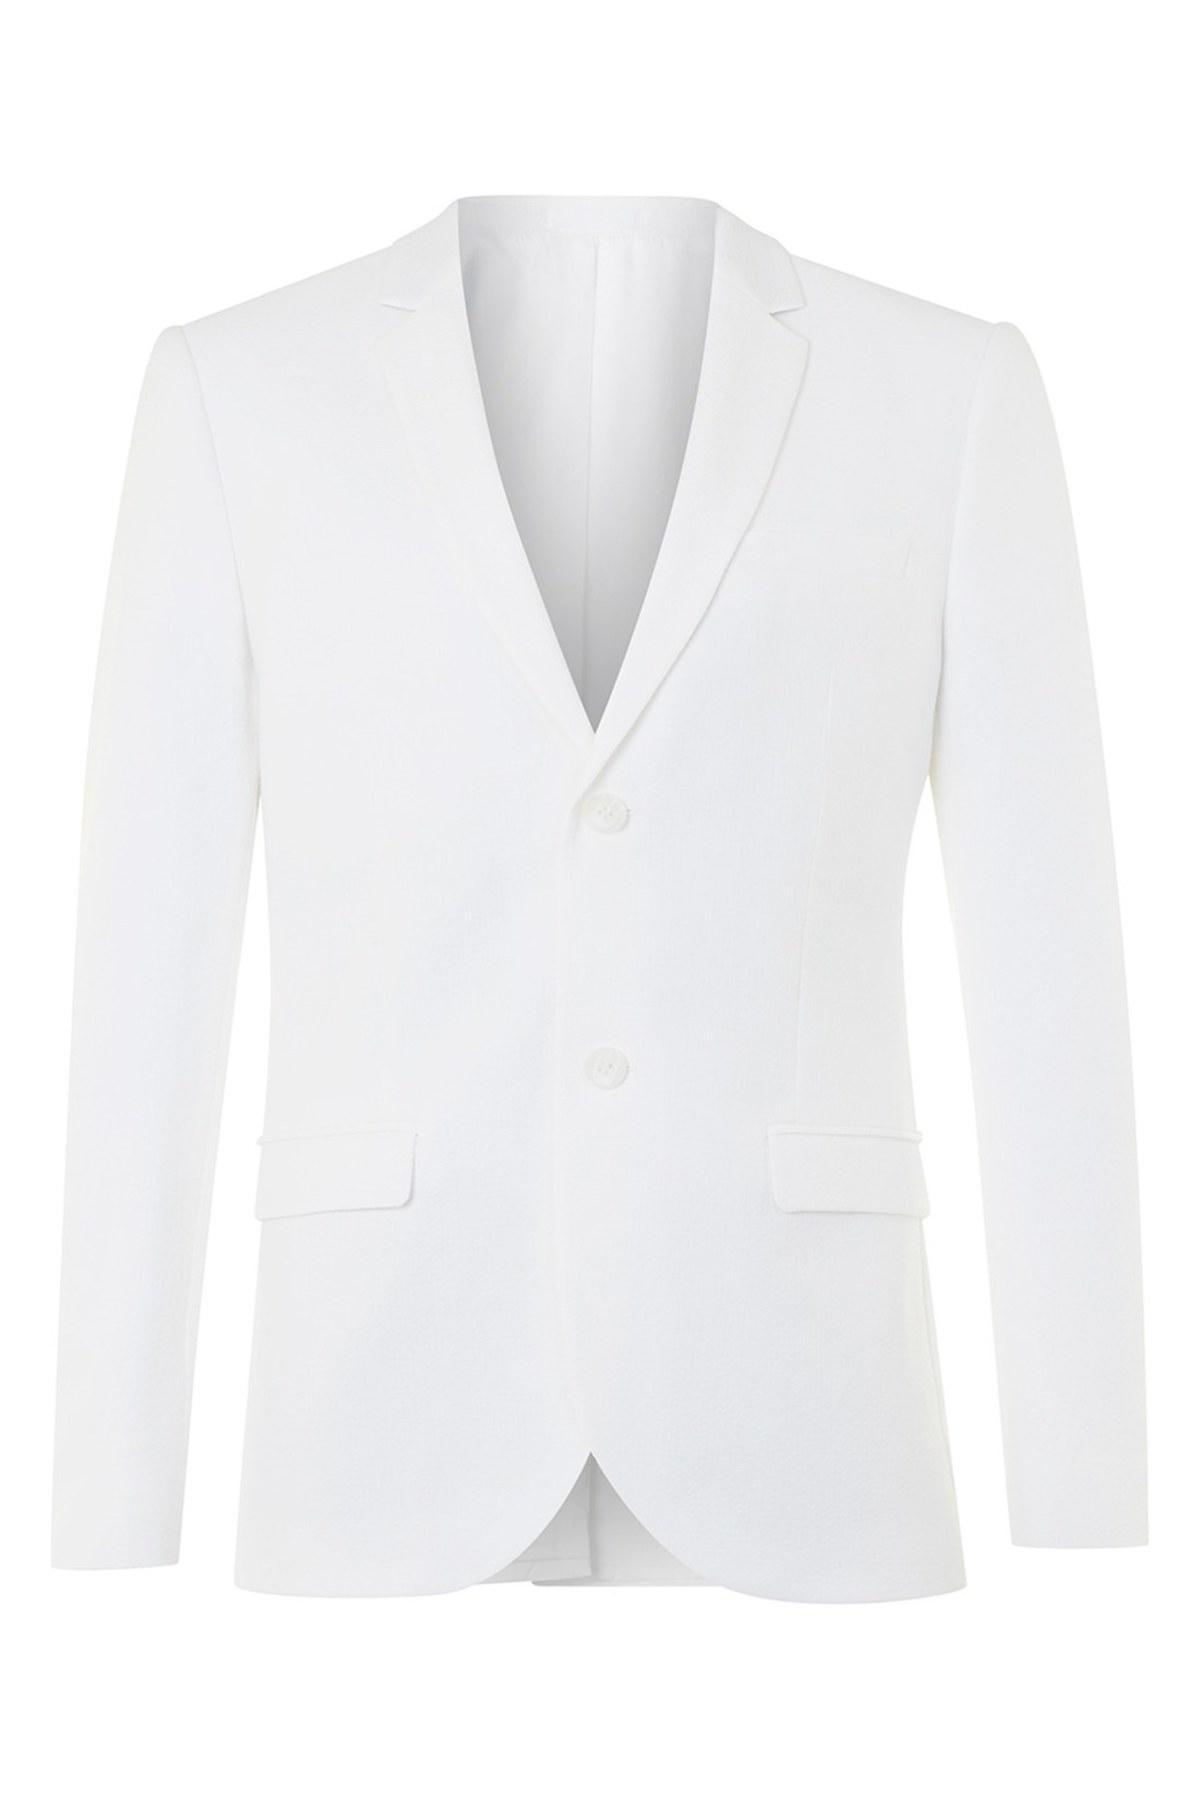 Lyst - TOPMAN Skinny Fit Seersucker Suit Jacket in White for Men